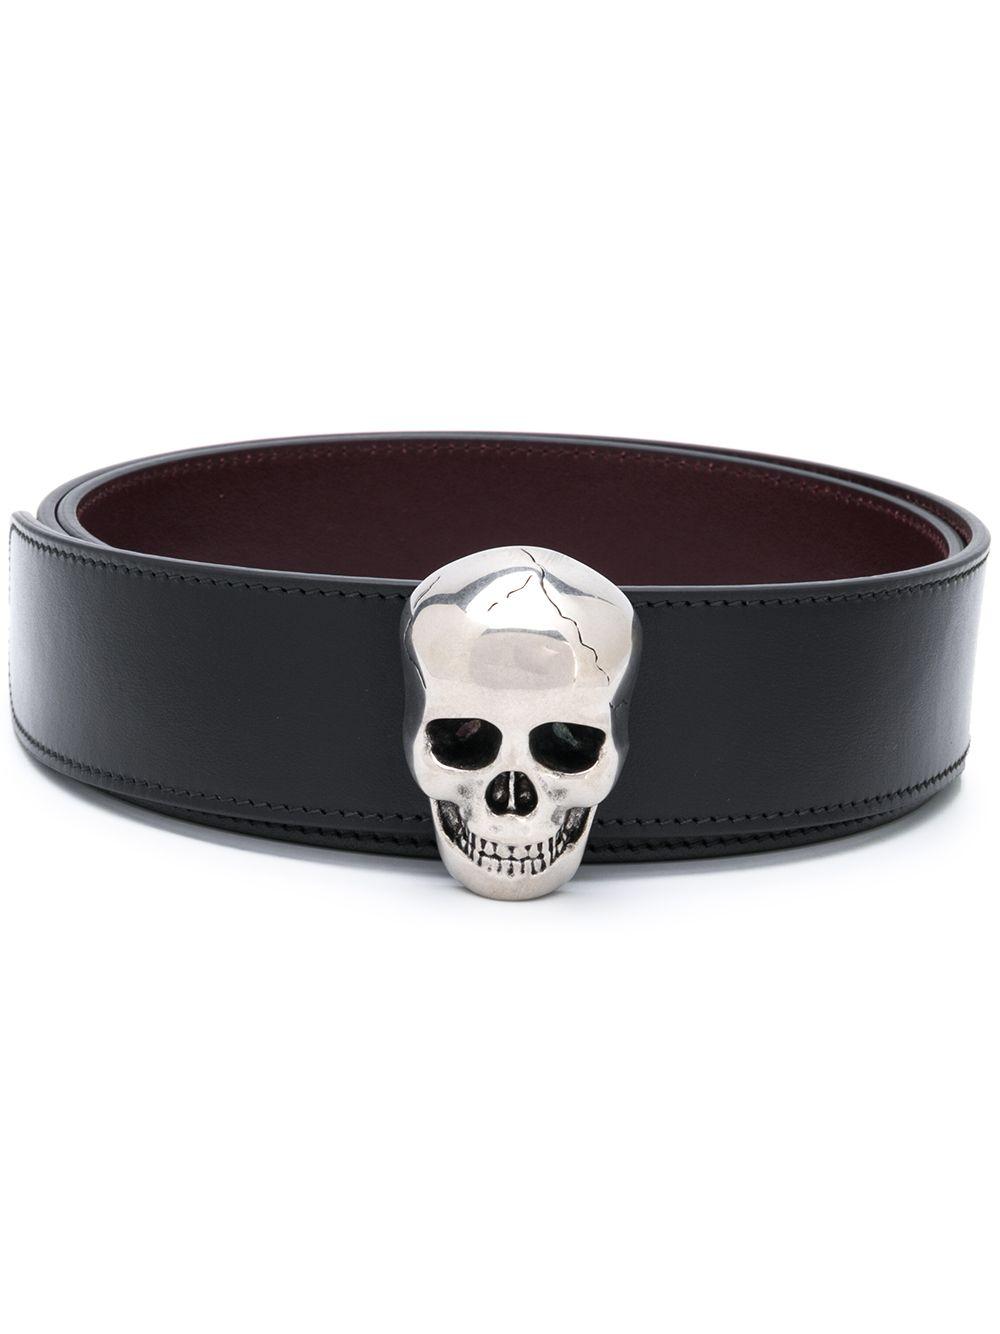 Alexander McQueen Leather Skull Buckle Belt in Black for Men - Lyst